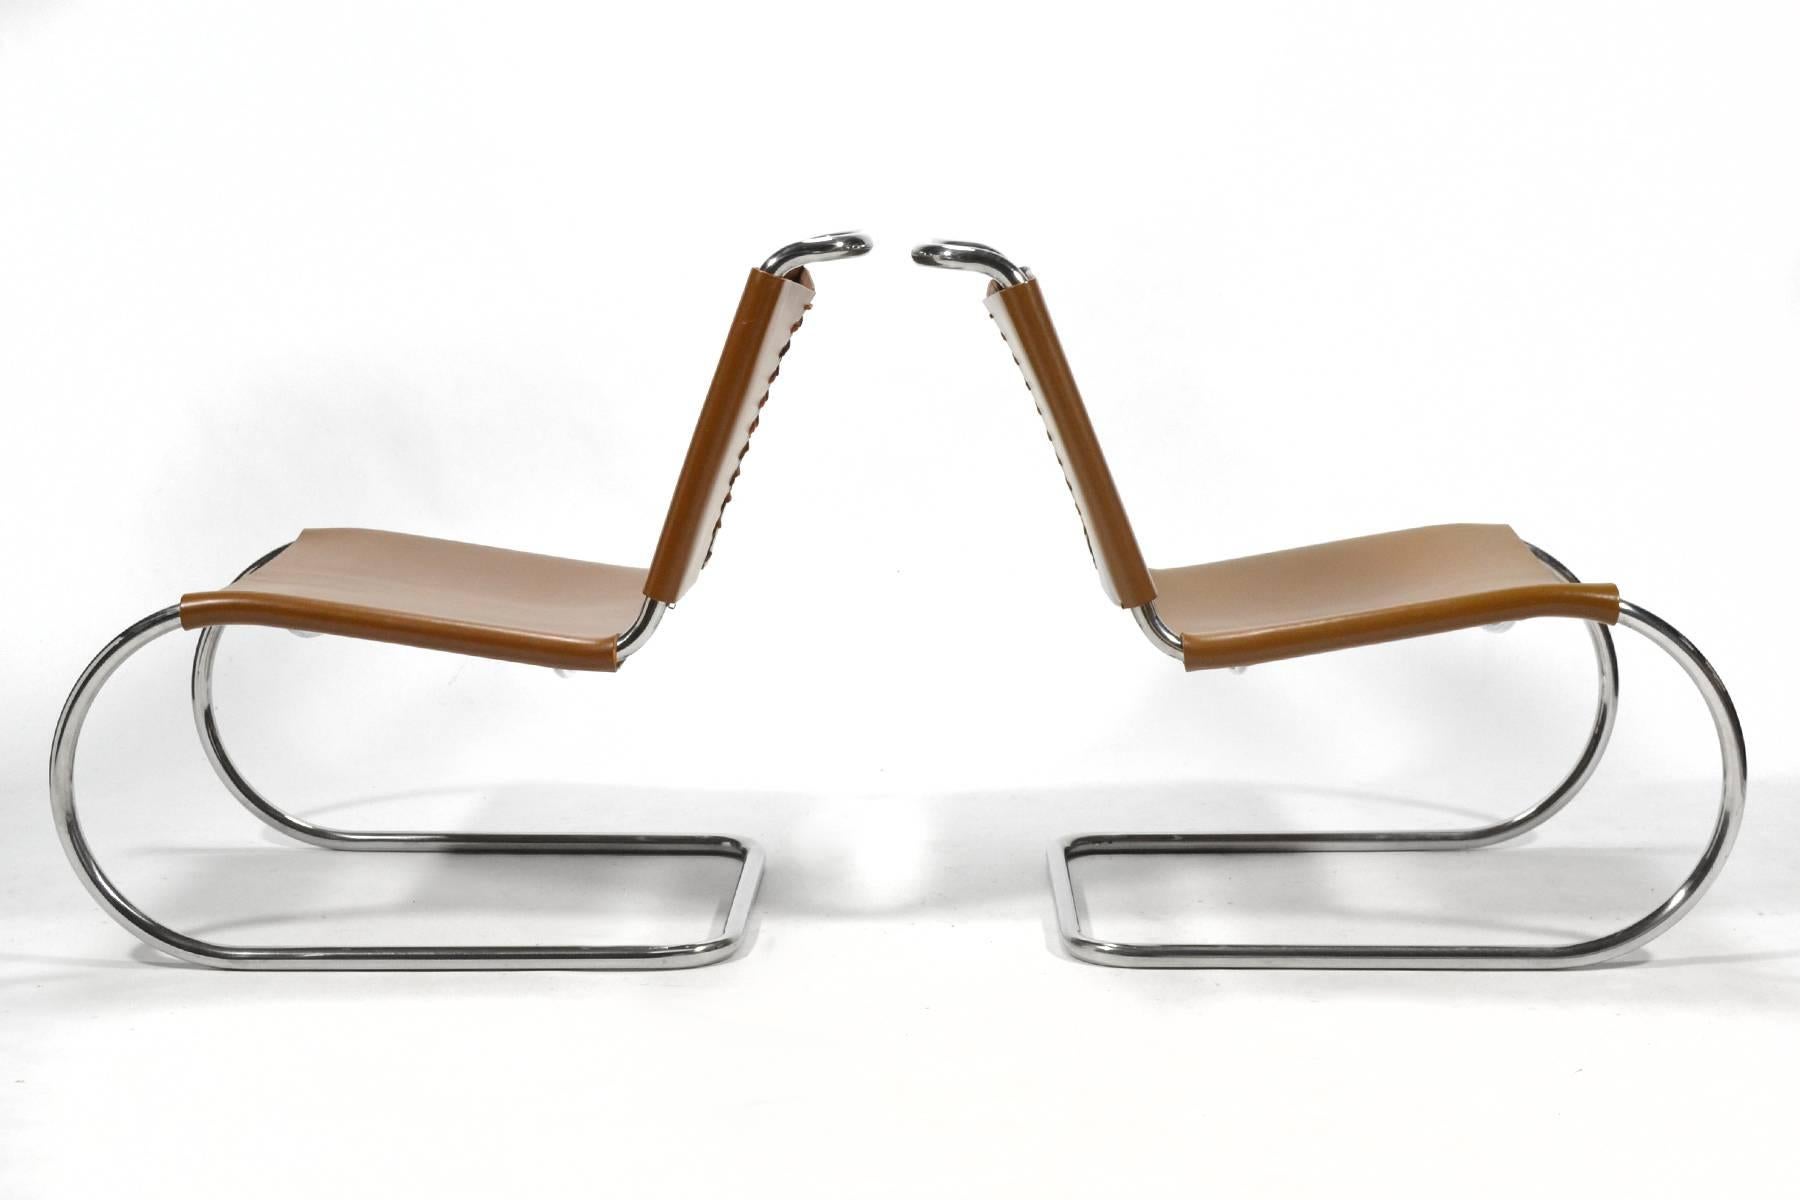 Mid-Century Modern Mies van der Rohe Pair of MR Lounge Chairs